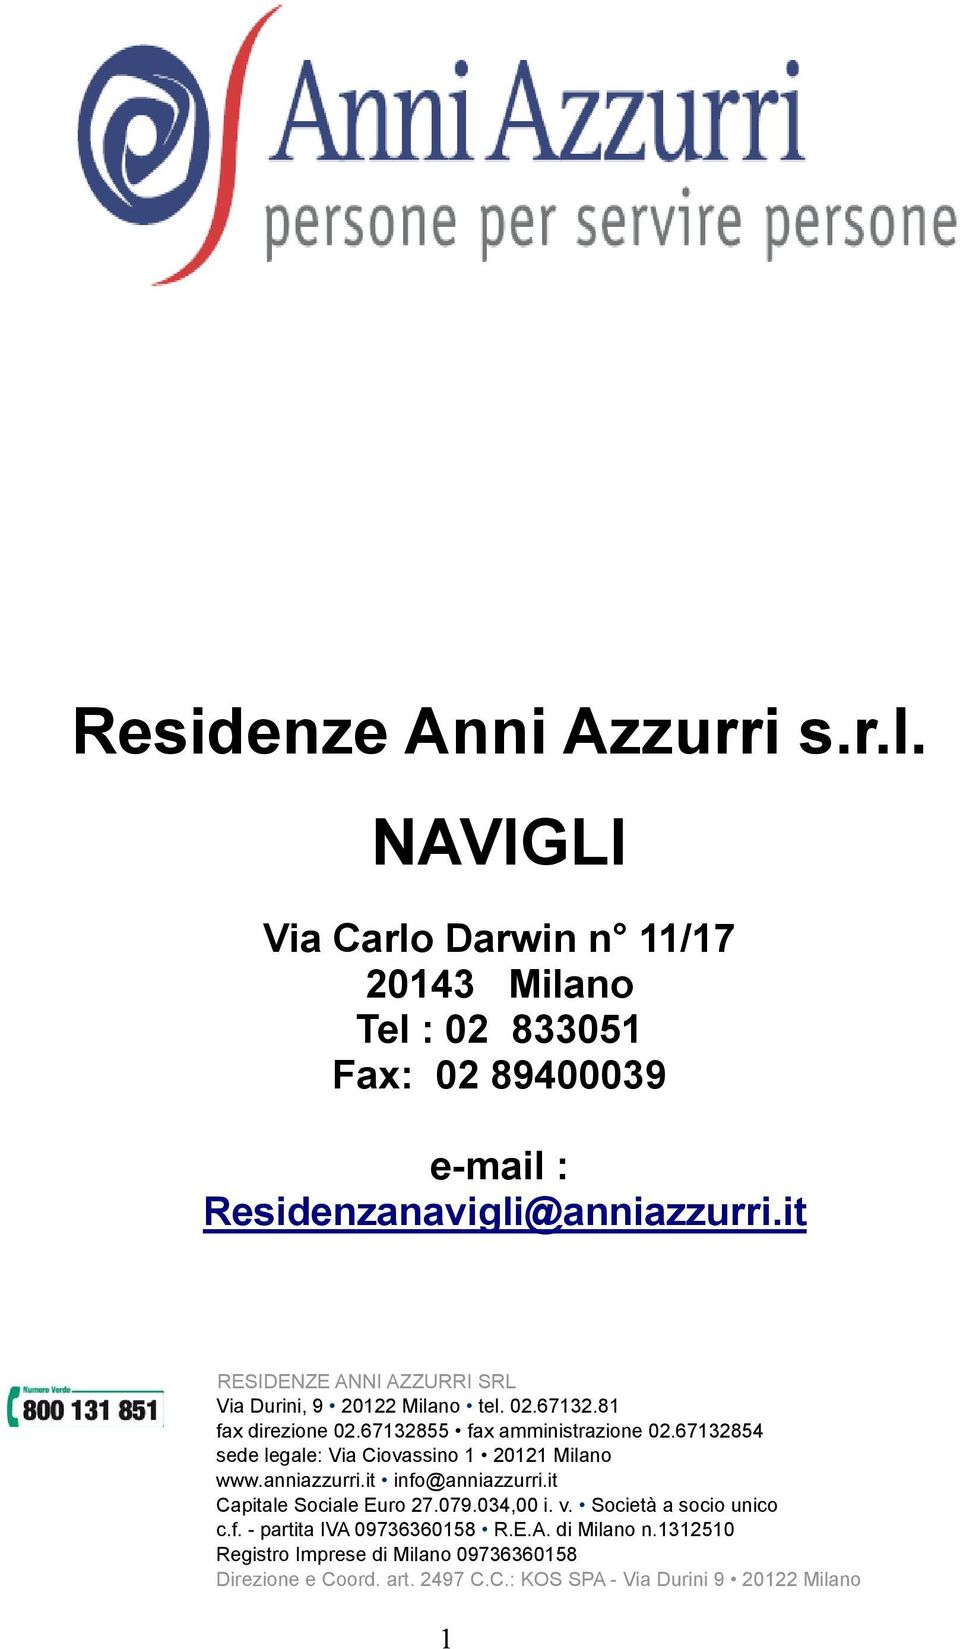 67132854 sede legale: Via Ciovassino 1 20121 Milano www.anniazzurri.it info@anniazzurri.it Capitale Sociale Euro 27.079.034,00 i. v.